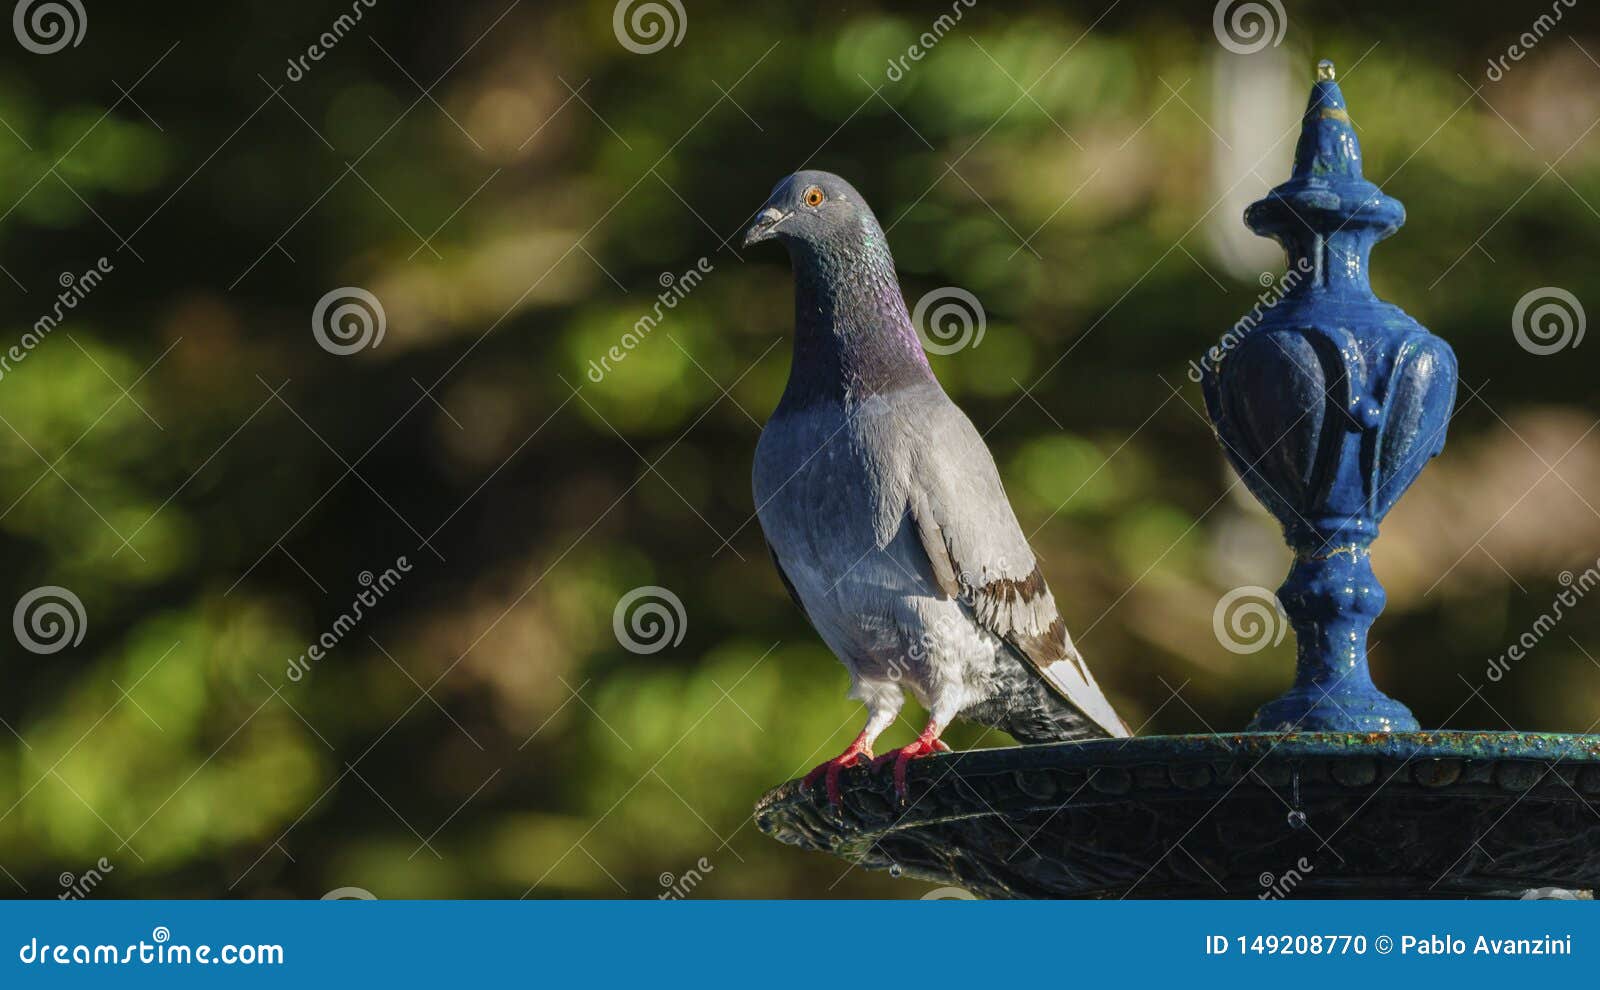 rock pigeon at genoves park fountain cadiz